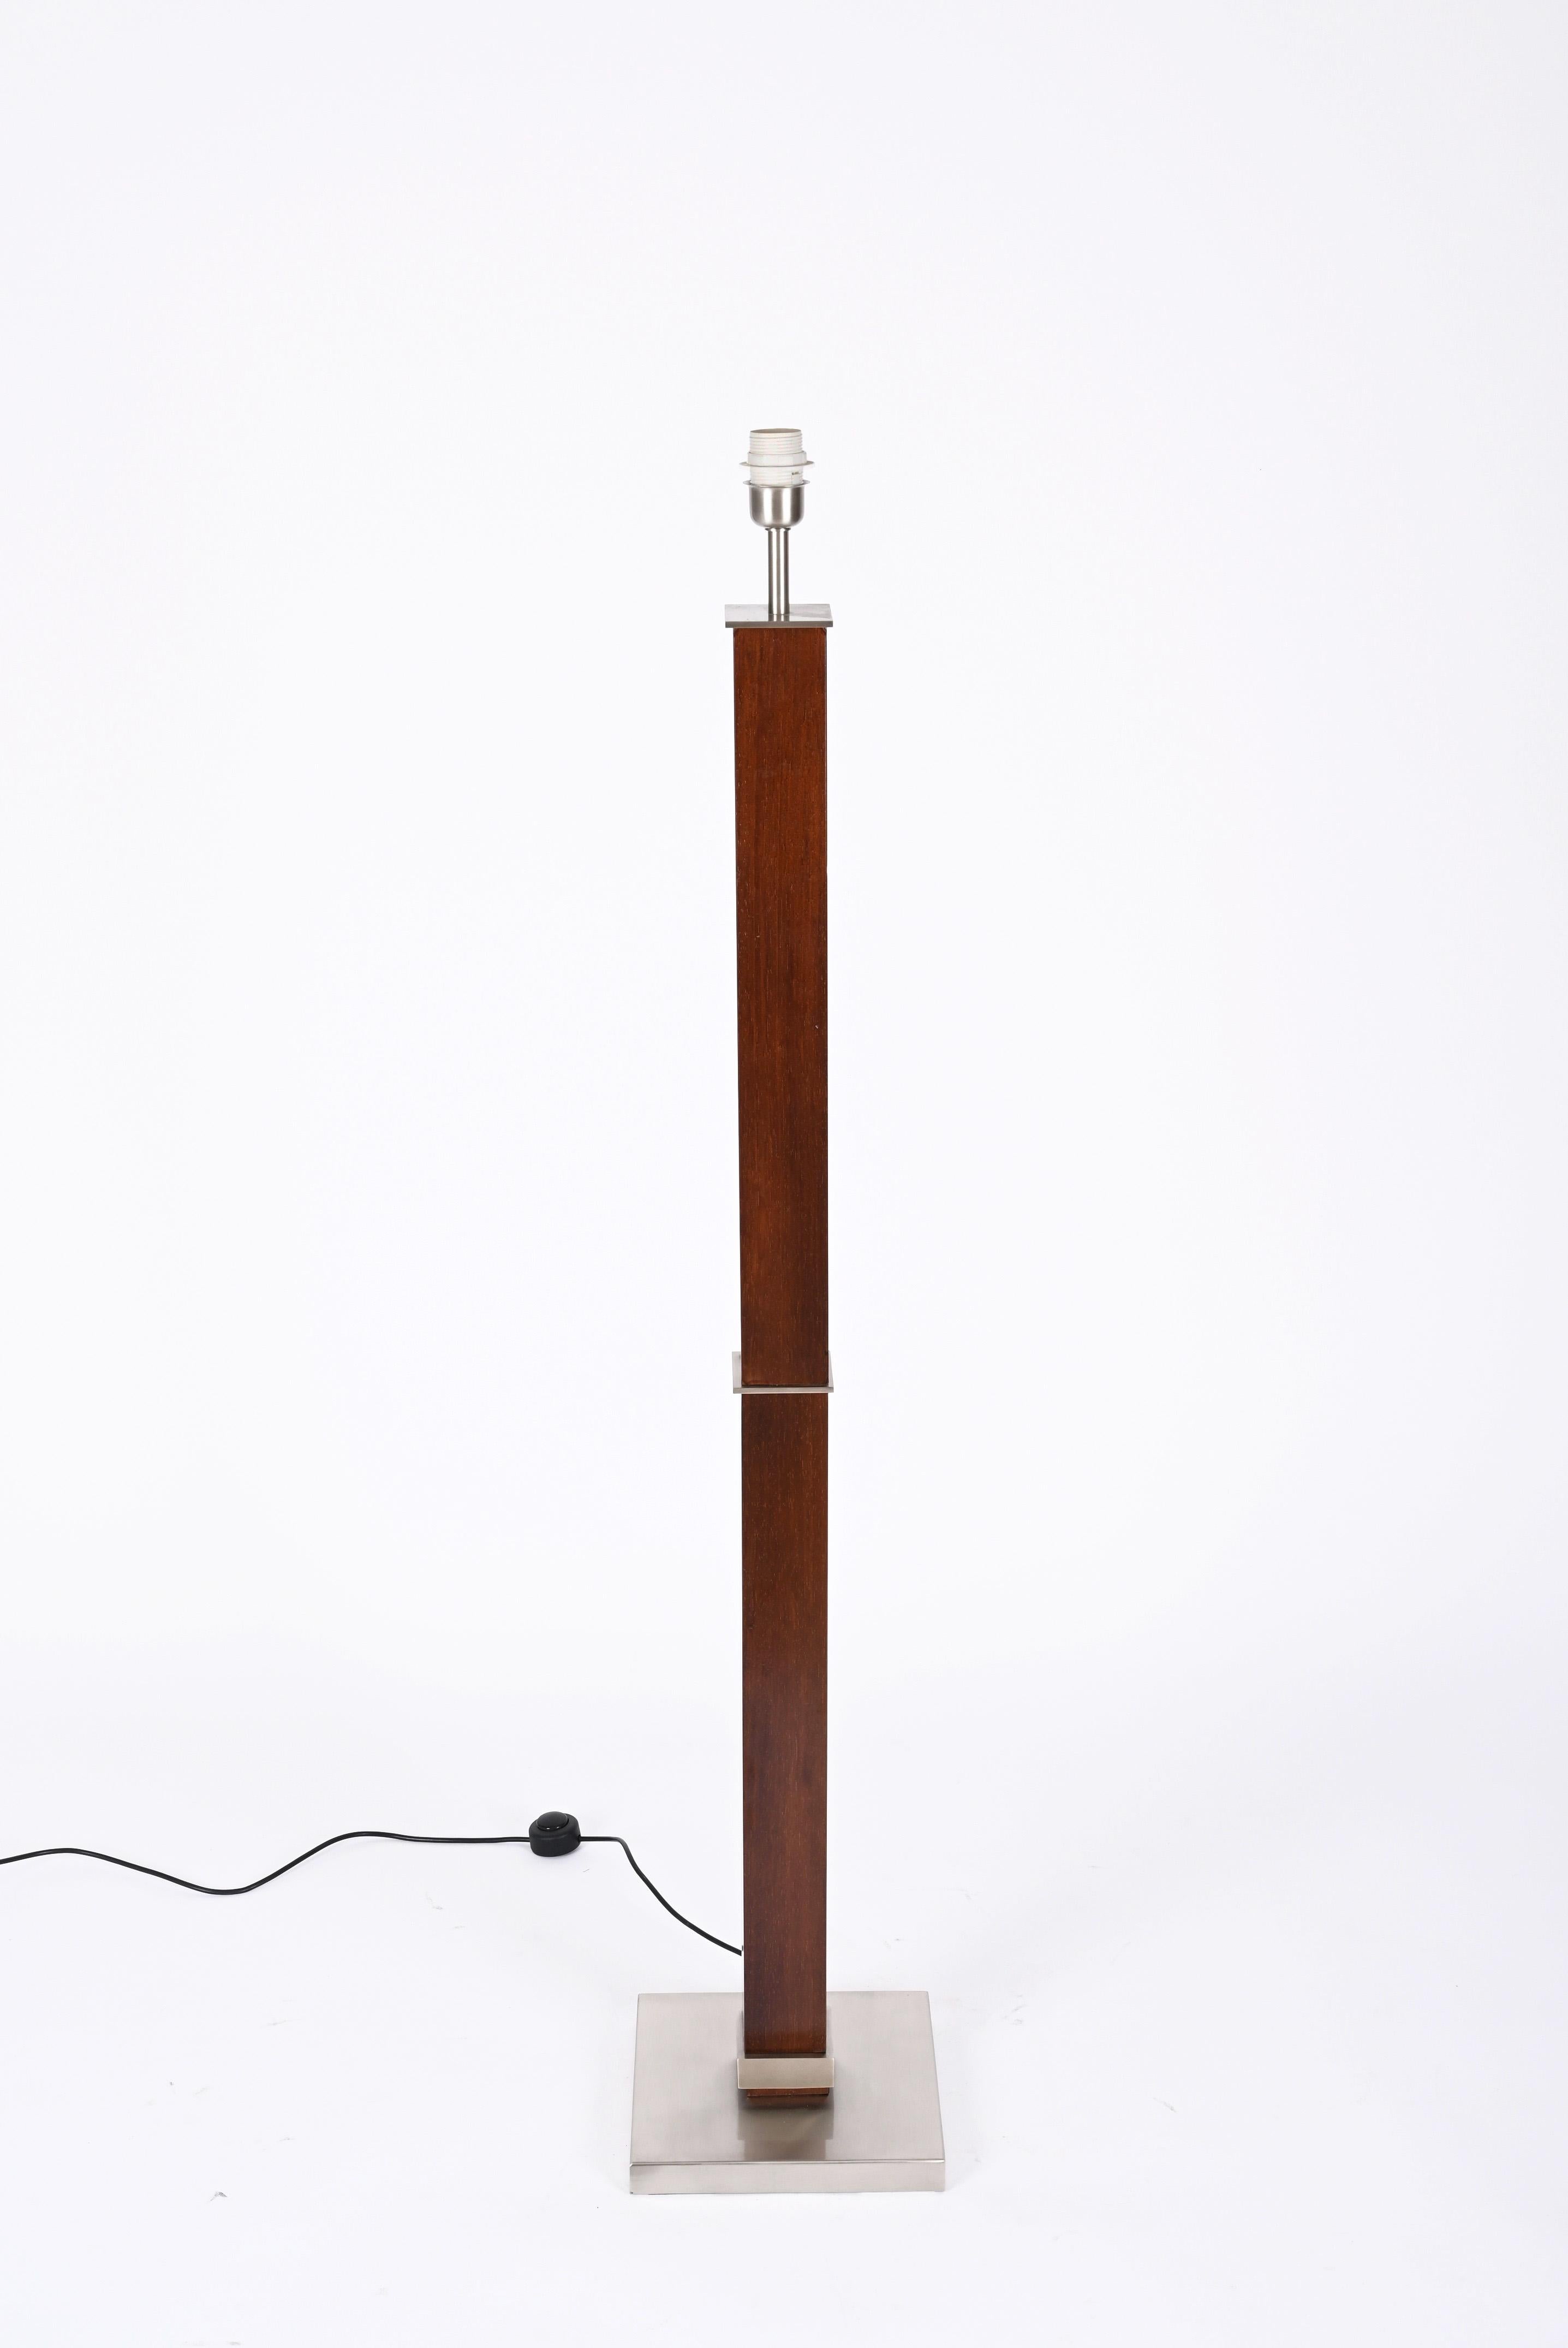 Zonca Voghera Minimal Midcentury Italian Wood and Steel Floor Lamp, 1980s For Sale 2